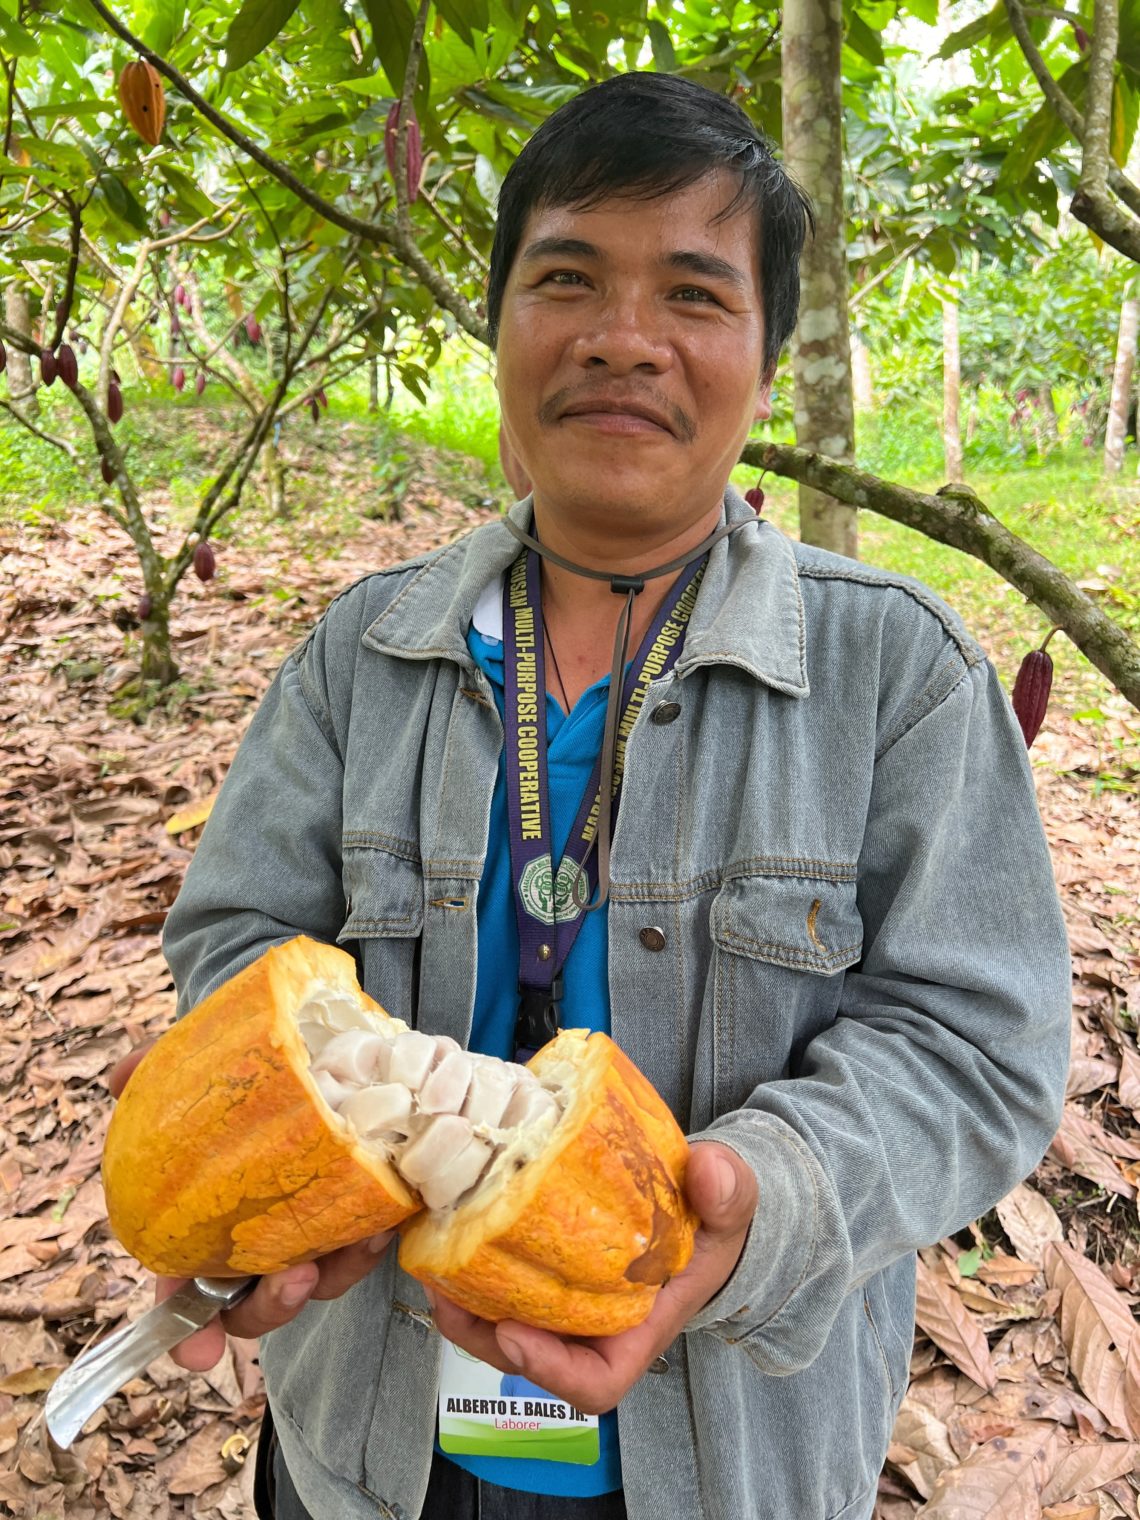 Man holding cut fruit